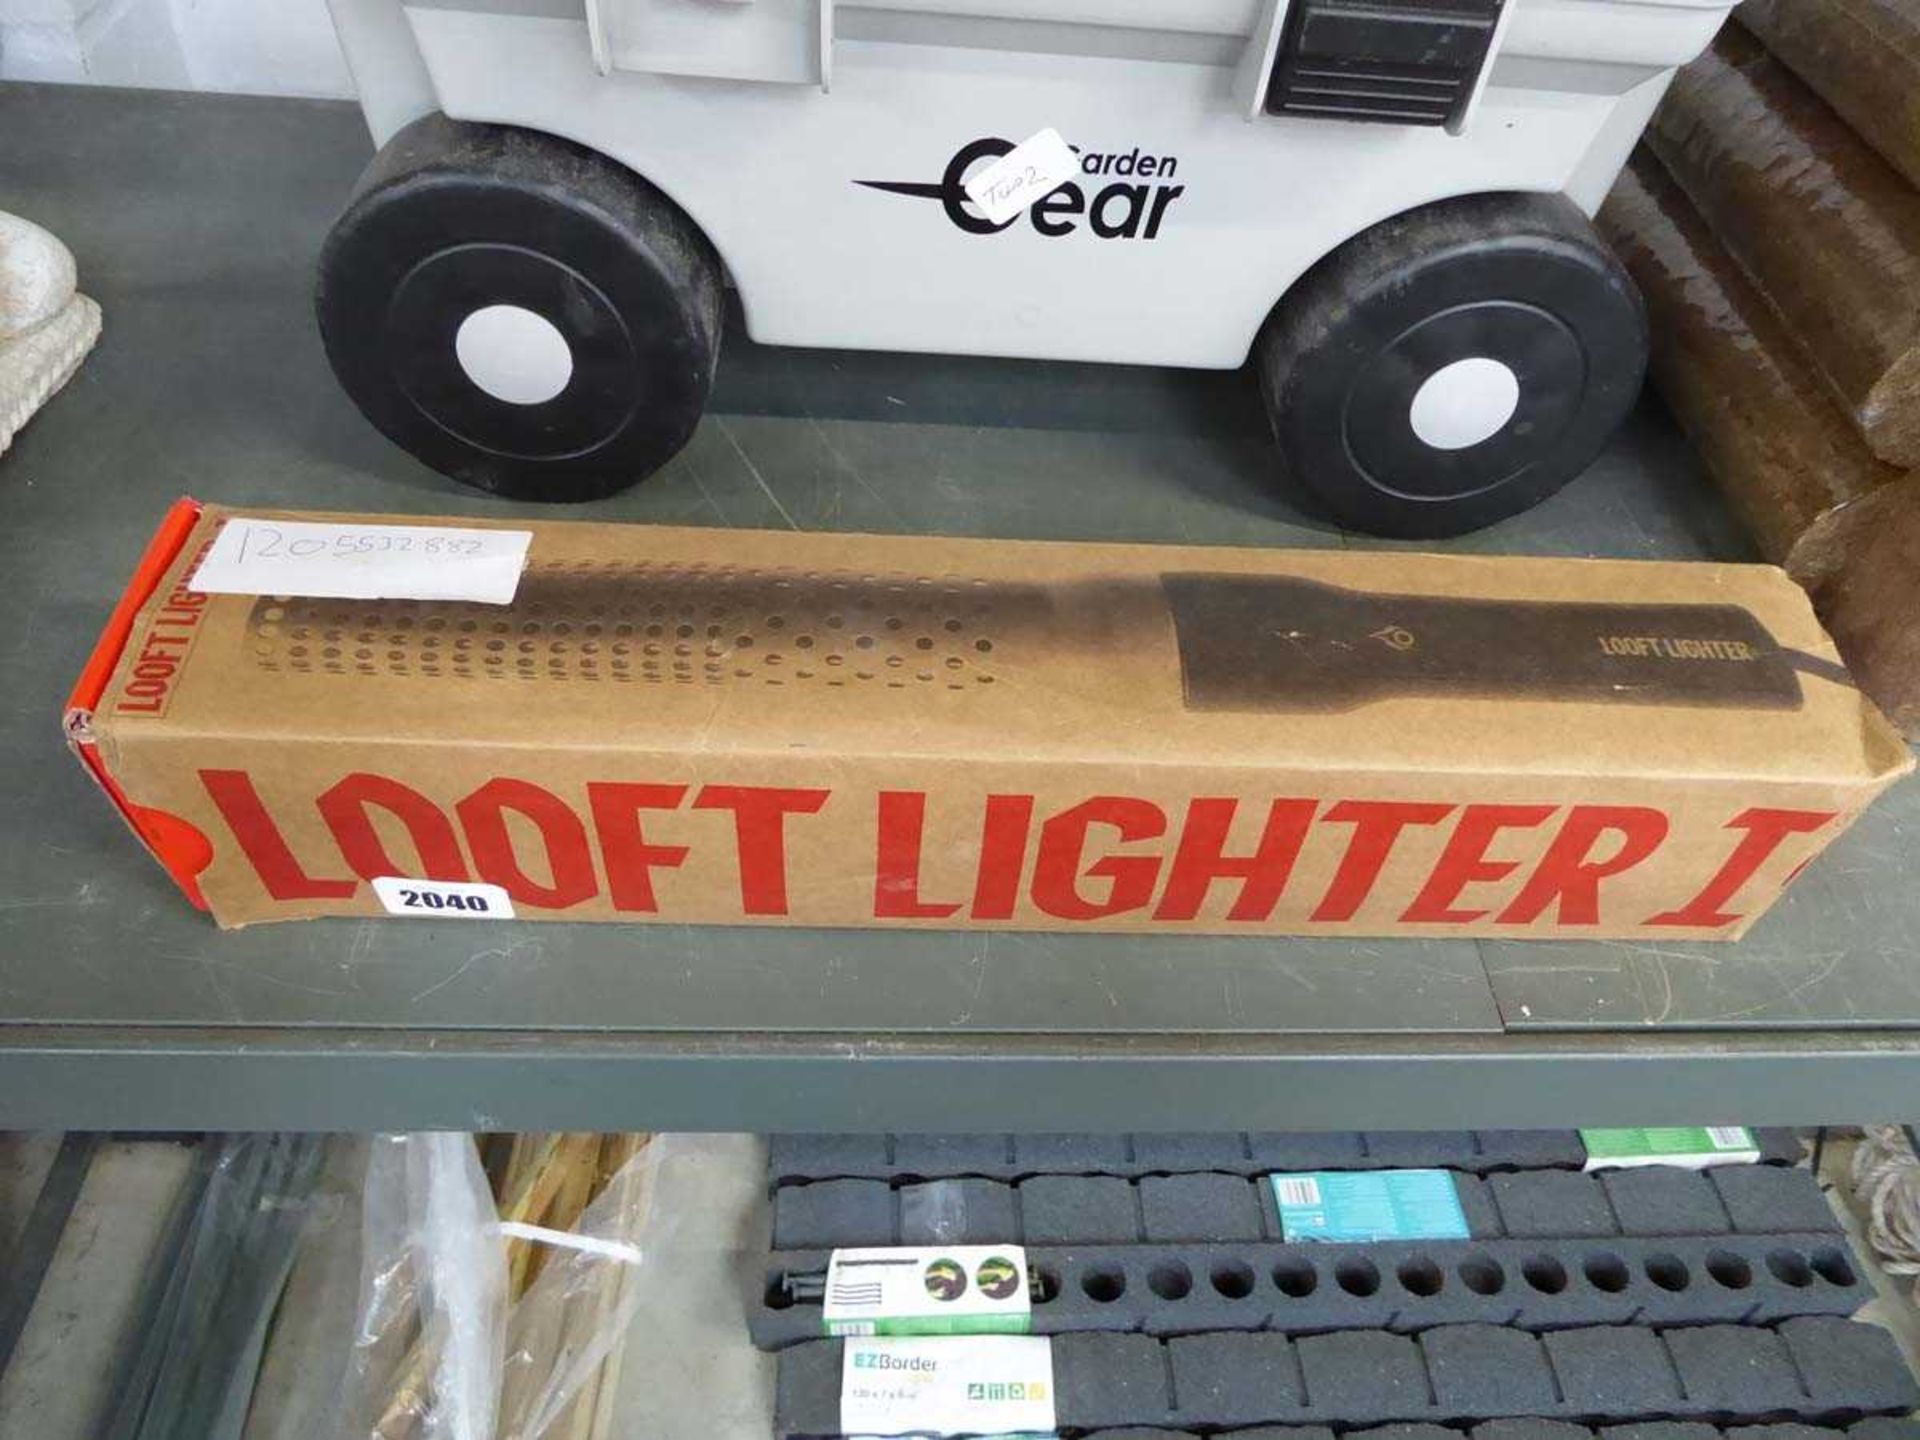 Looft lighter